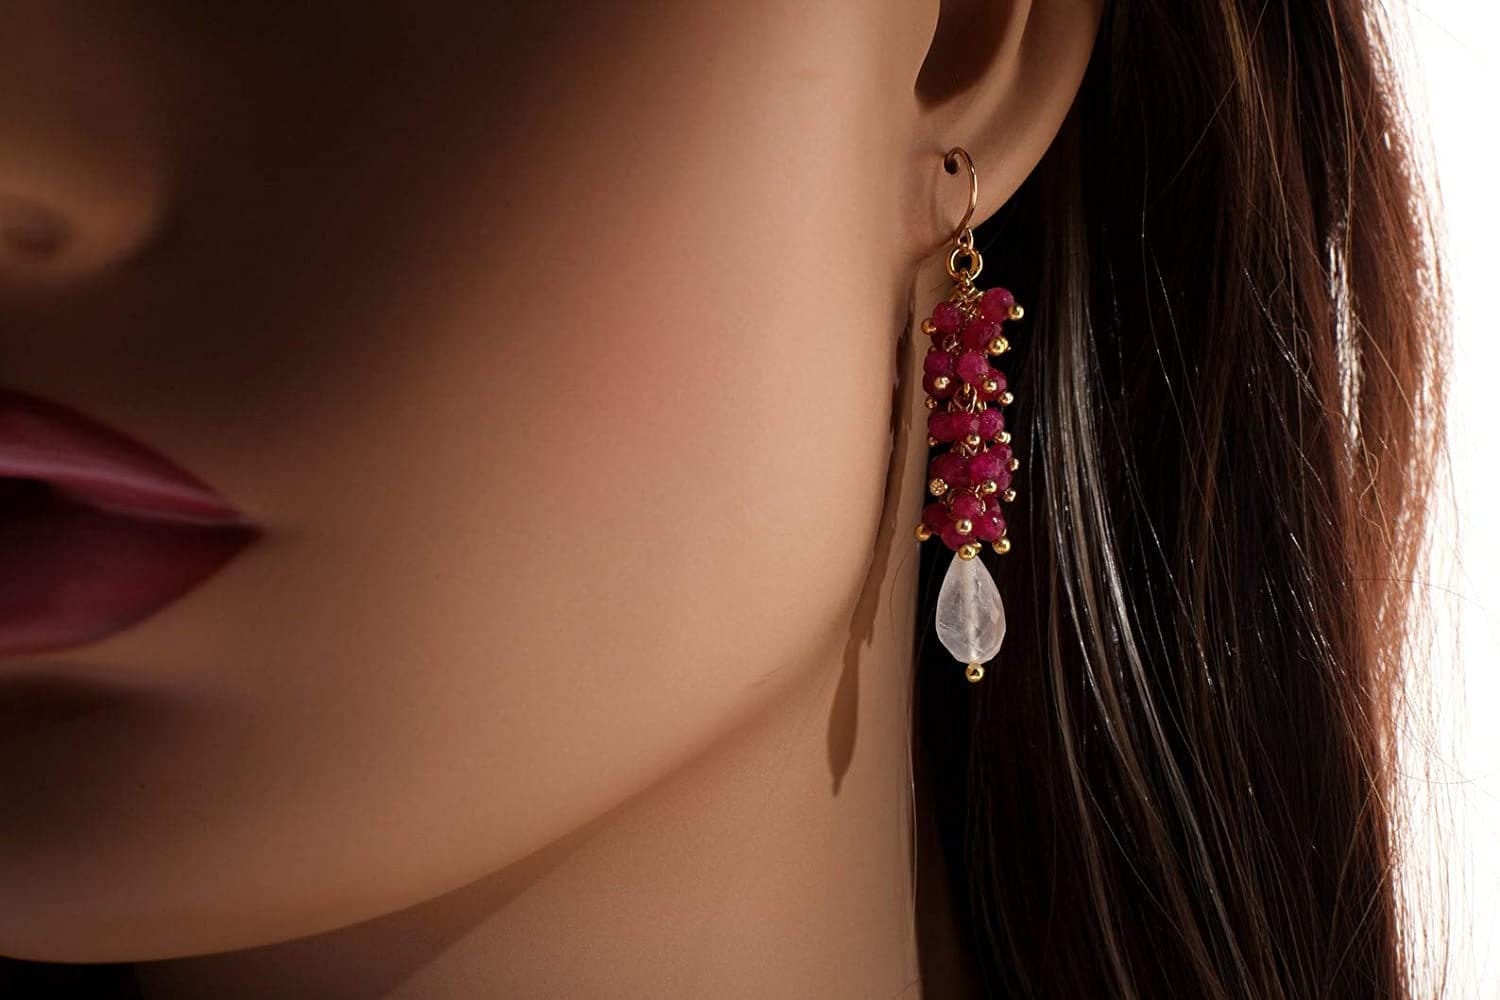 Moonstone Briolette Teardrop, Genuine Pink Ruby Clusters in 14K Gold Filled Earrings, Boho, Gemstone Jewelry Gift for Her